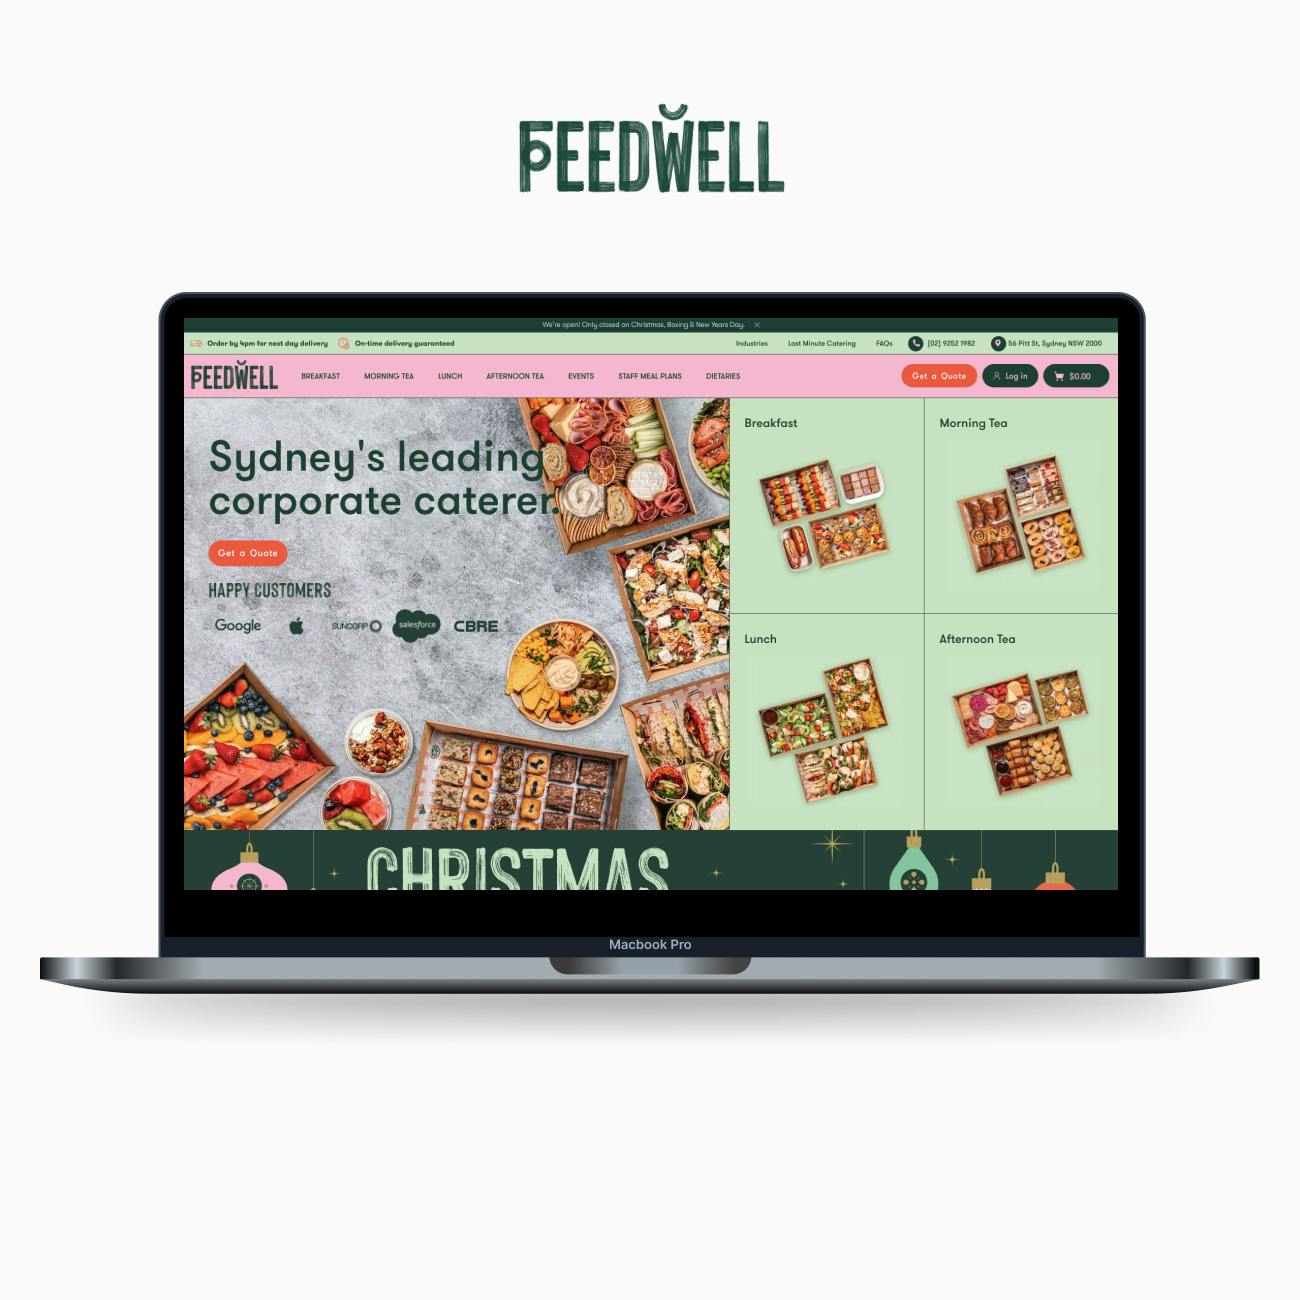 Feedwell - custom build eCommerce webstite using WooCommerce by Freelance Web Developer WebKingdom